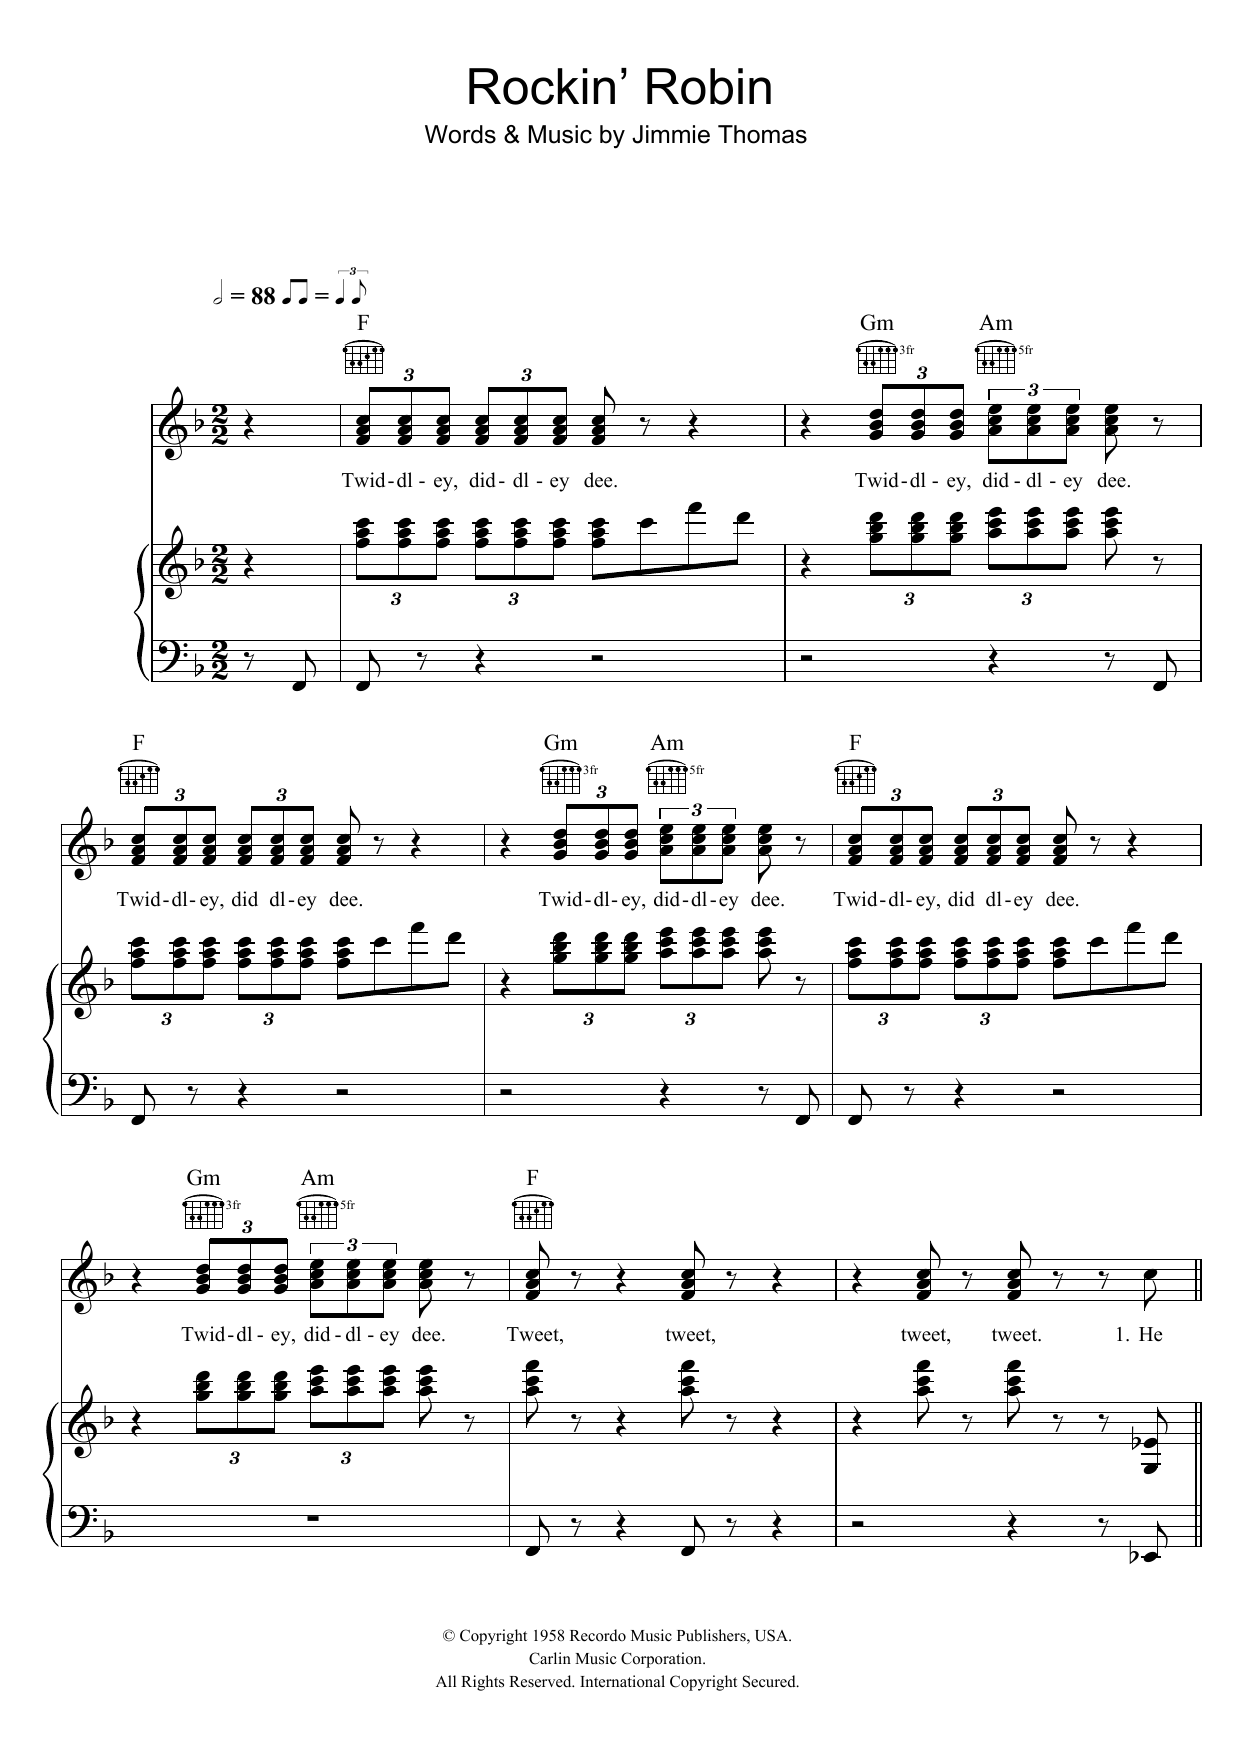 J. Thomas Rockin' Robin Sheet Music Notes & Chords for Alto Saxophone - Download or Print PDF